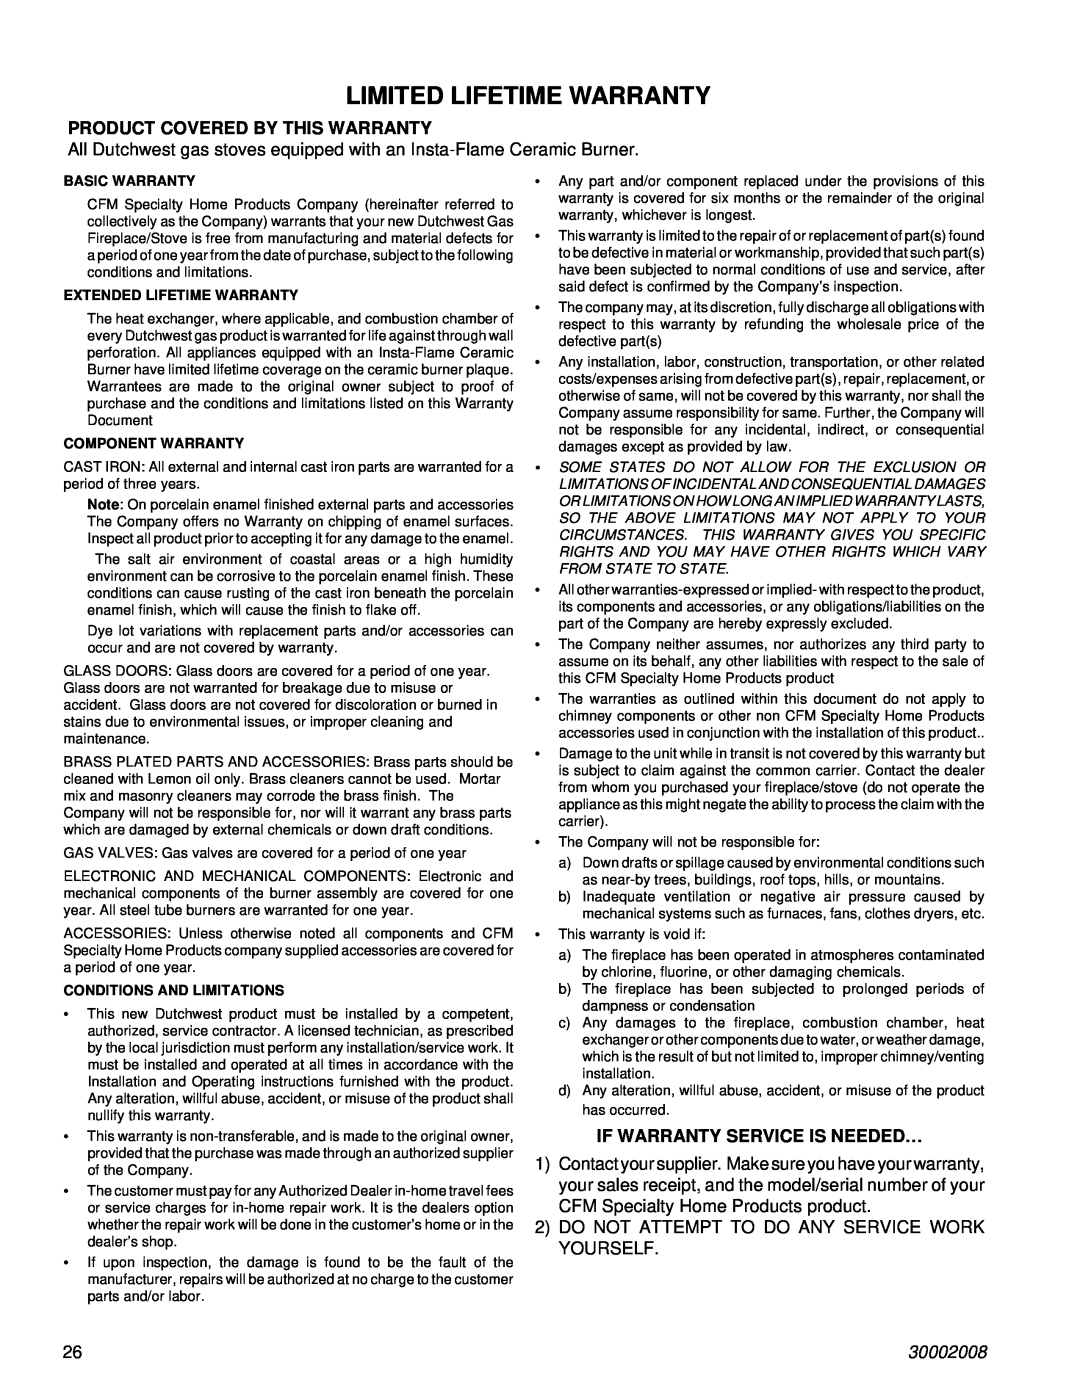 CFM Corporation 2467, 2468 manual Limited Lifetime Warranty, Dutchwest Natural Vent Gas Heater, 30002008, Basic Warranty 